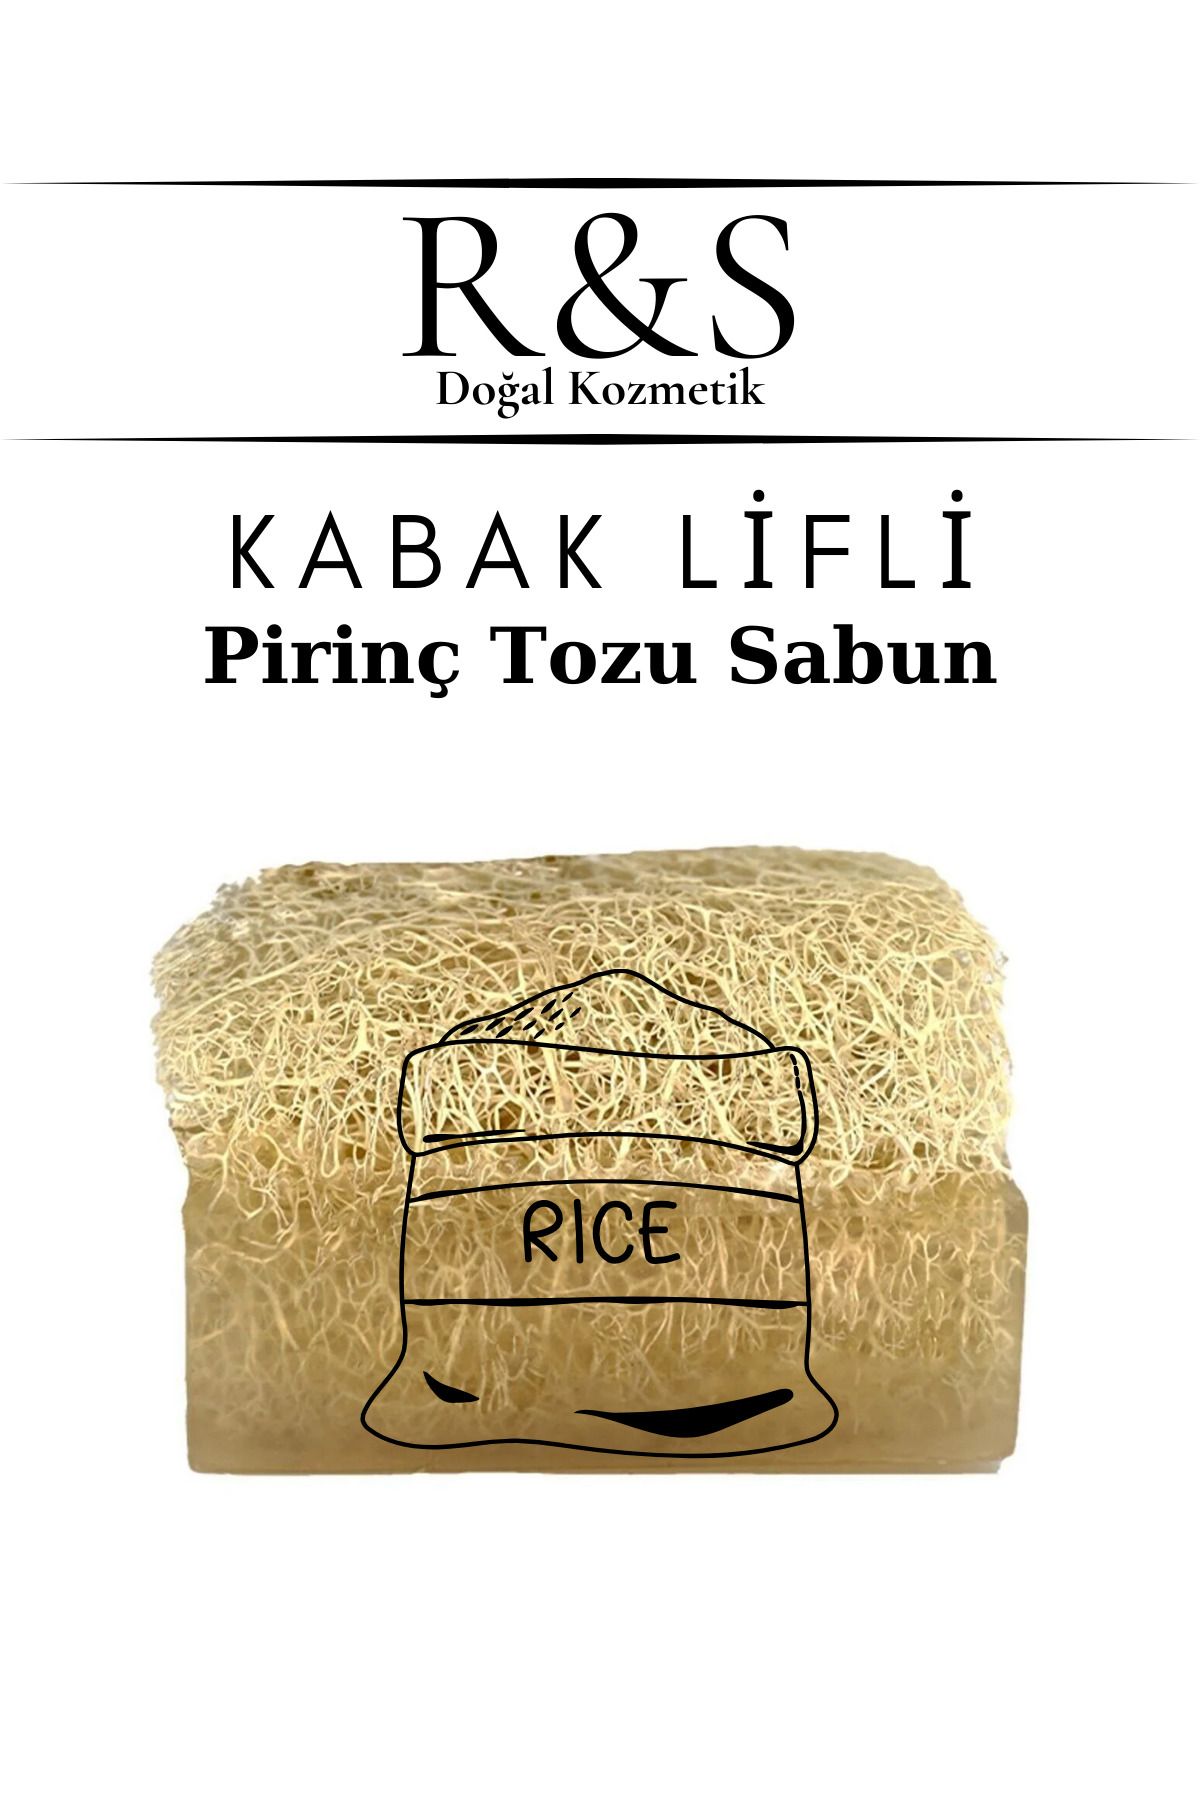 R&S Doğal Kozmetik %100 Doğal Kabak Lifli Pirinç Tozu Sabun